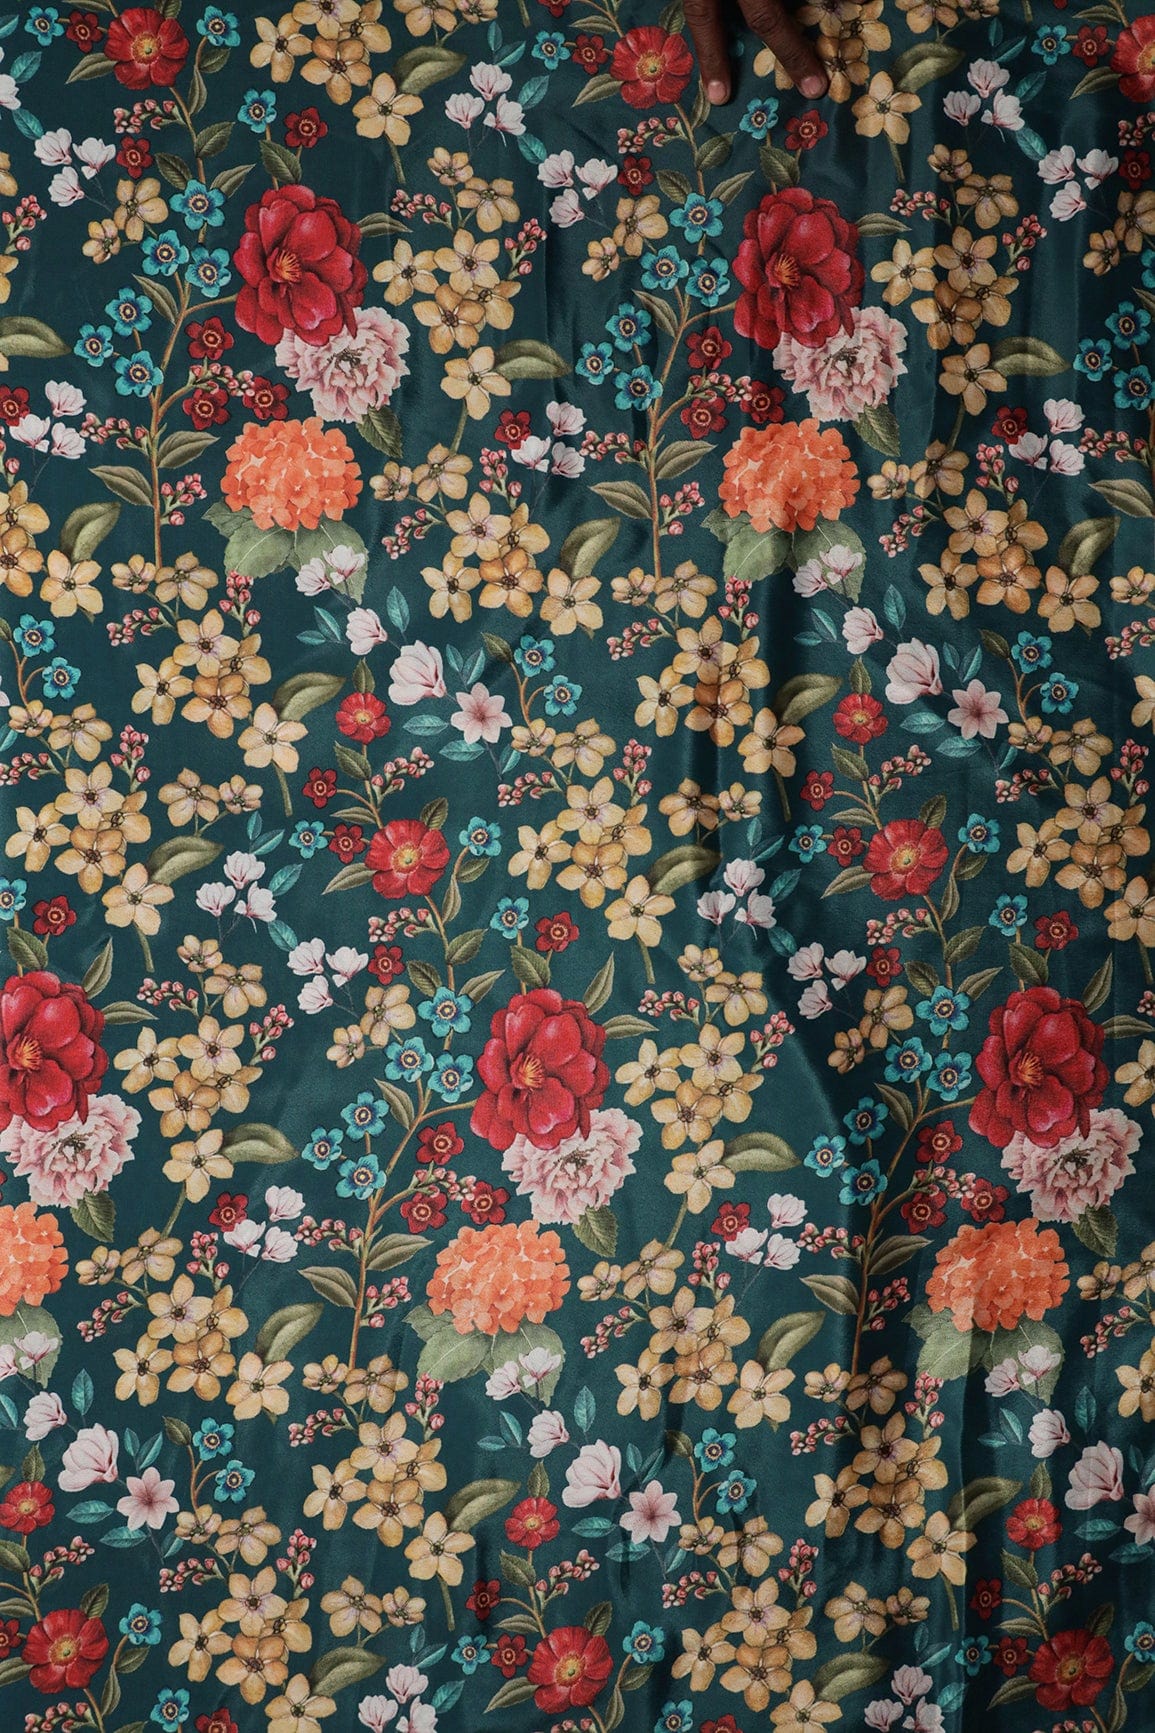 doeraa Prints Multi Color Floral Pattern Digital Print On Prussian Blue Malai Crepe Fabric